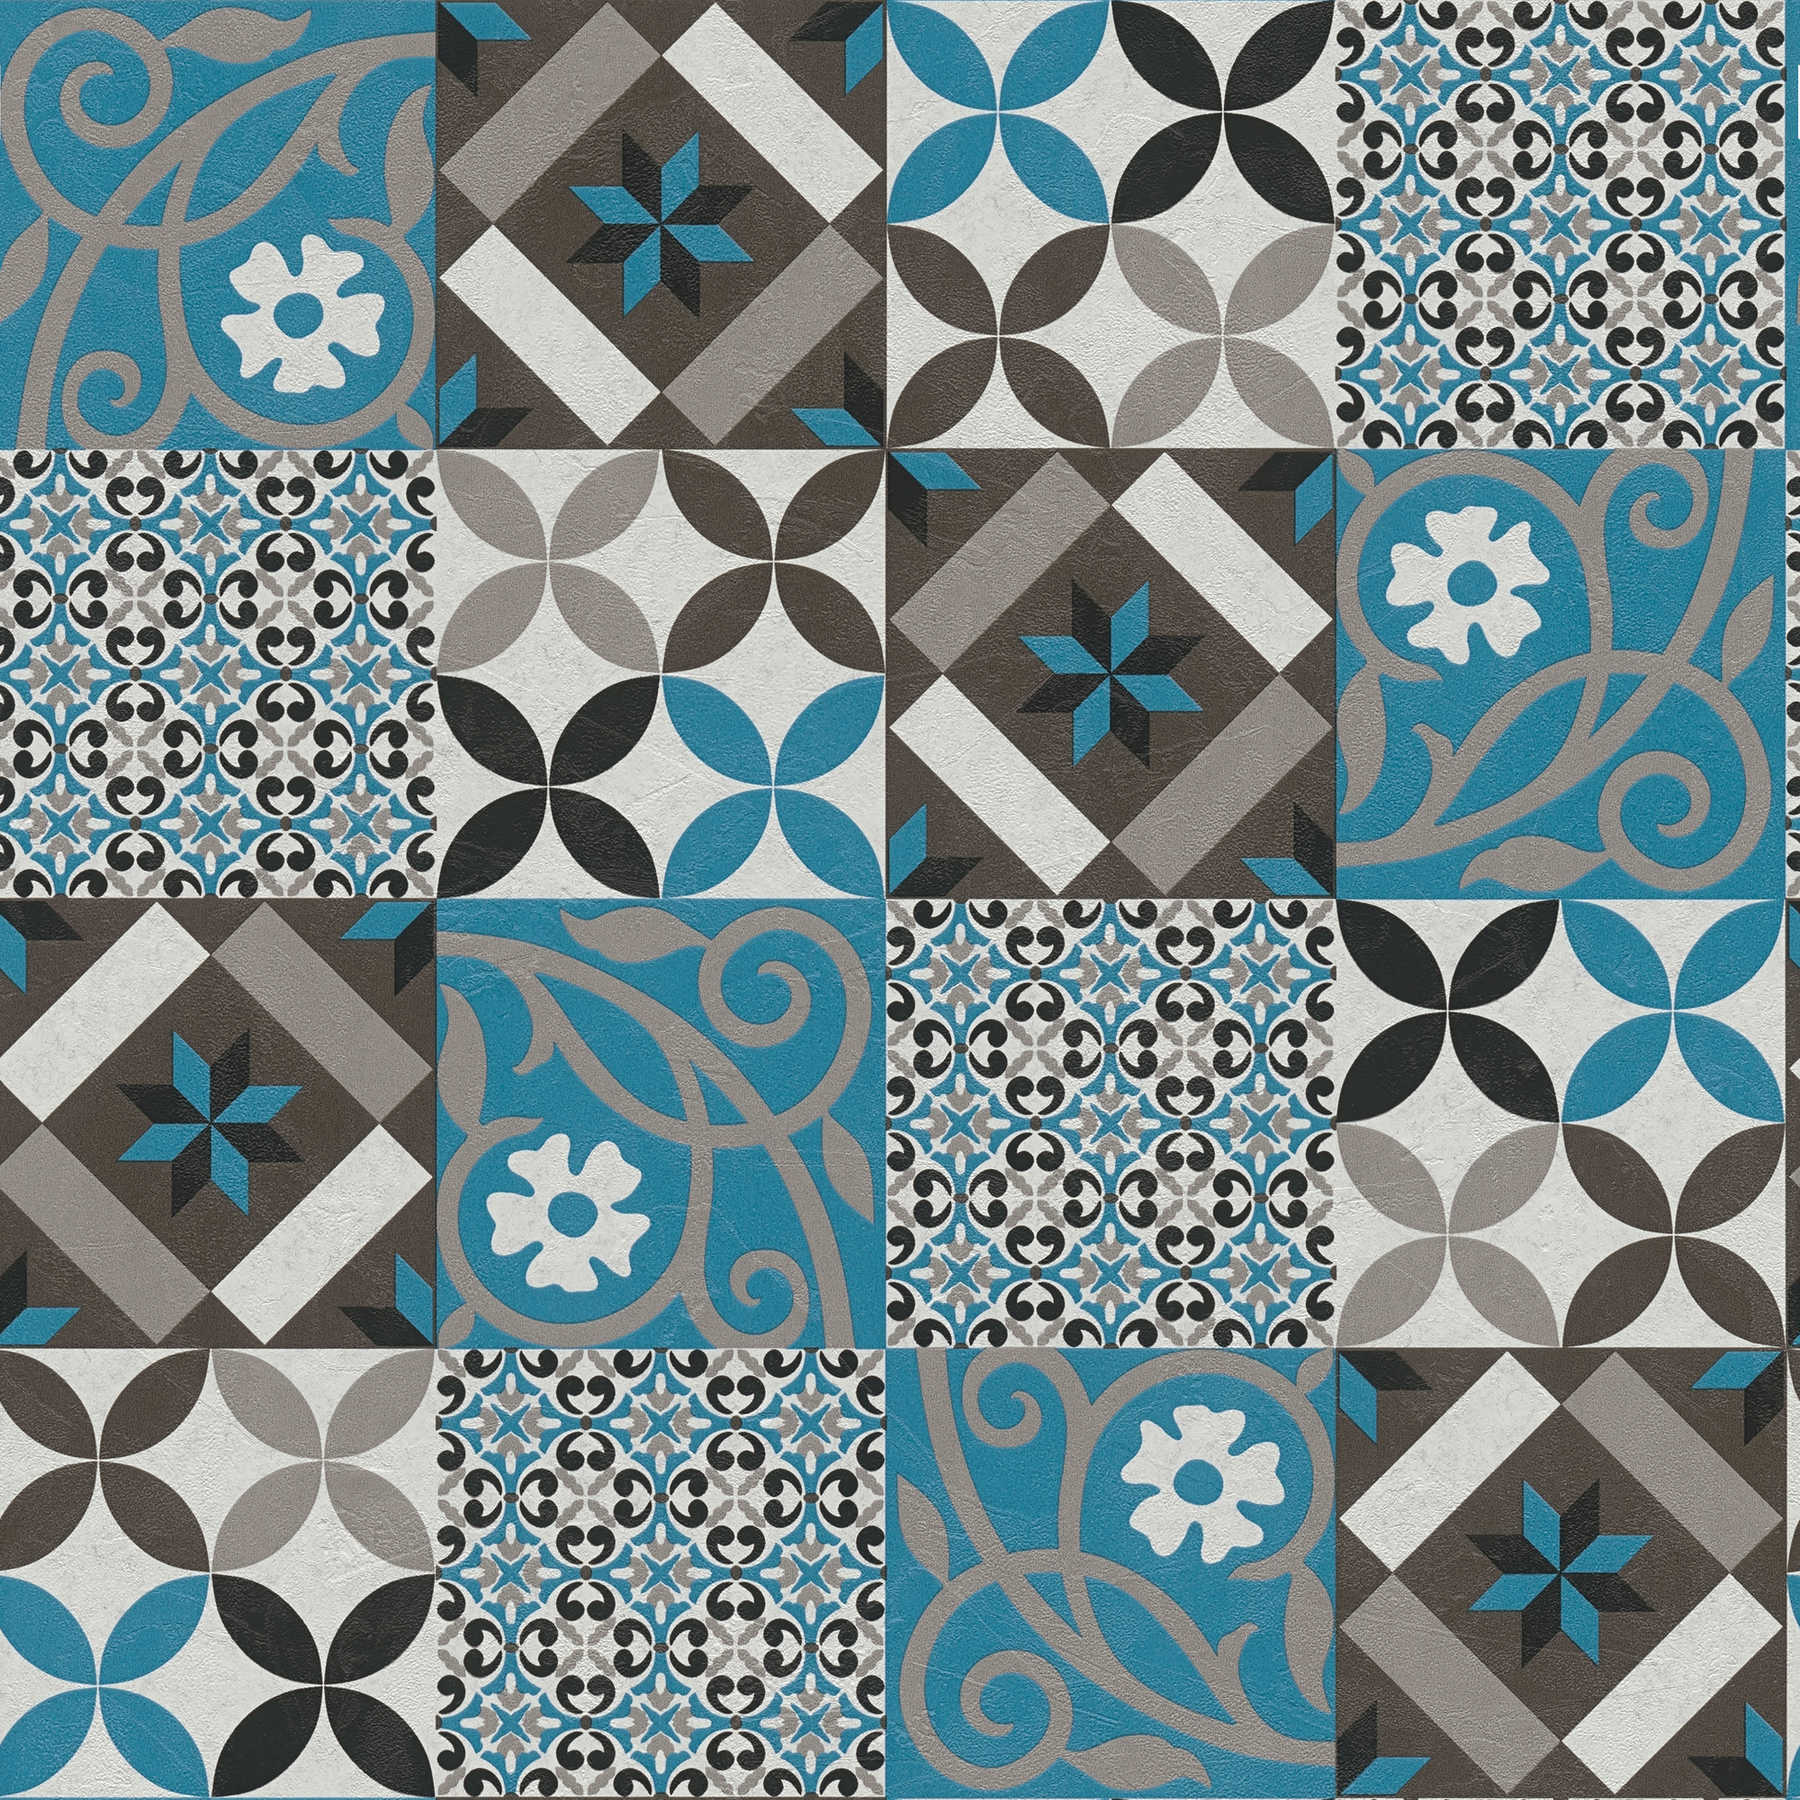         Non-woven wallpaper tiles pattern mix - black, blue, anthracite
    